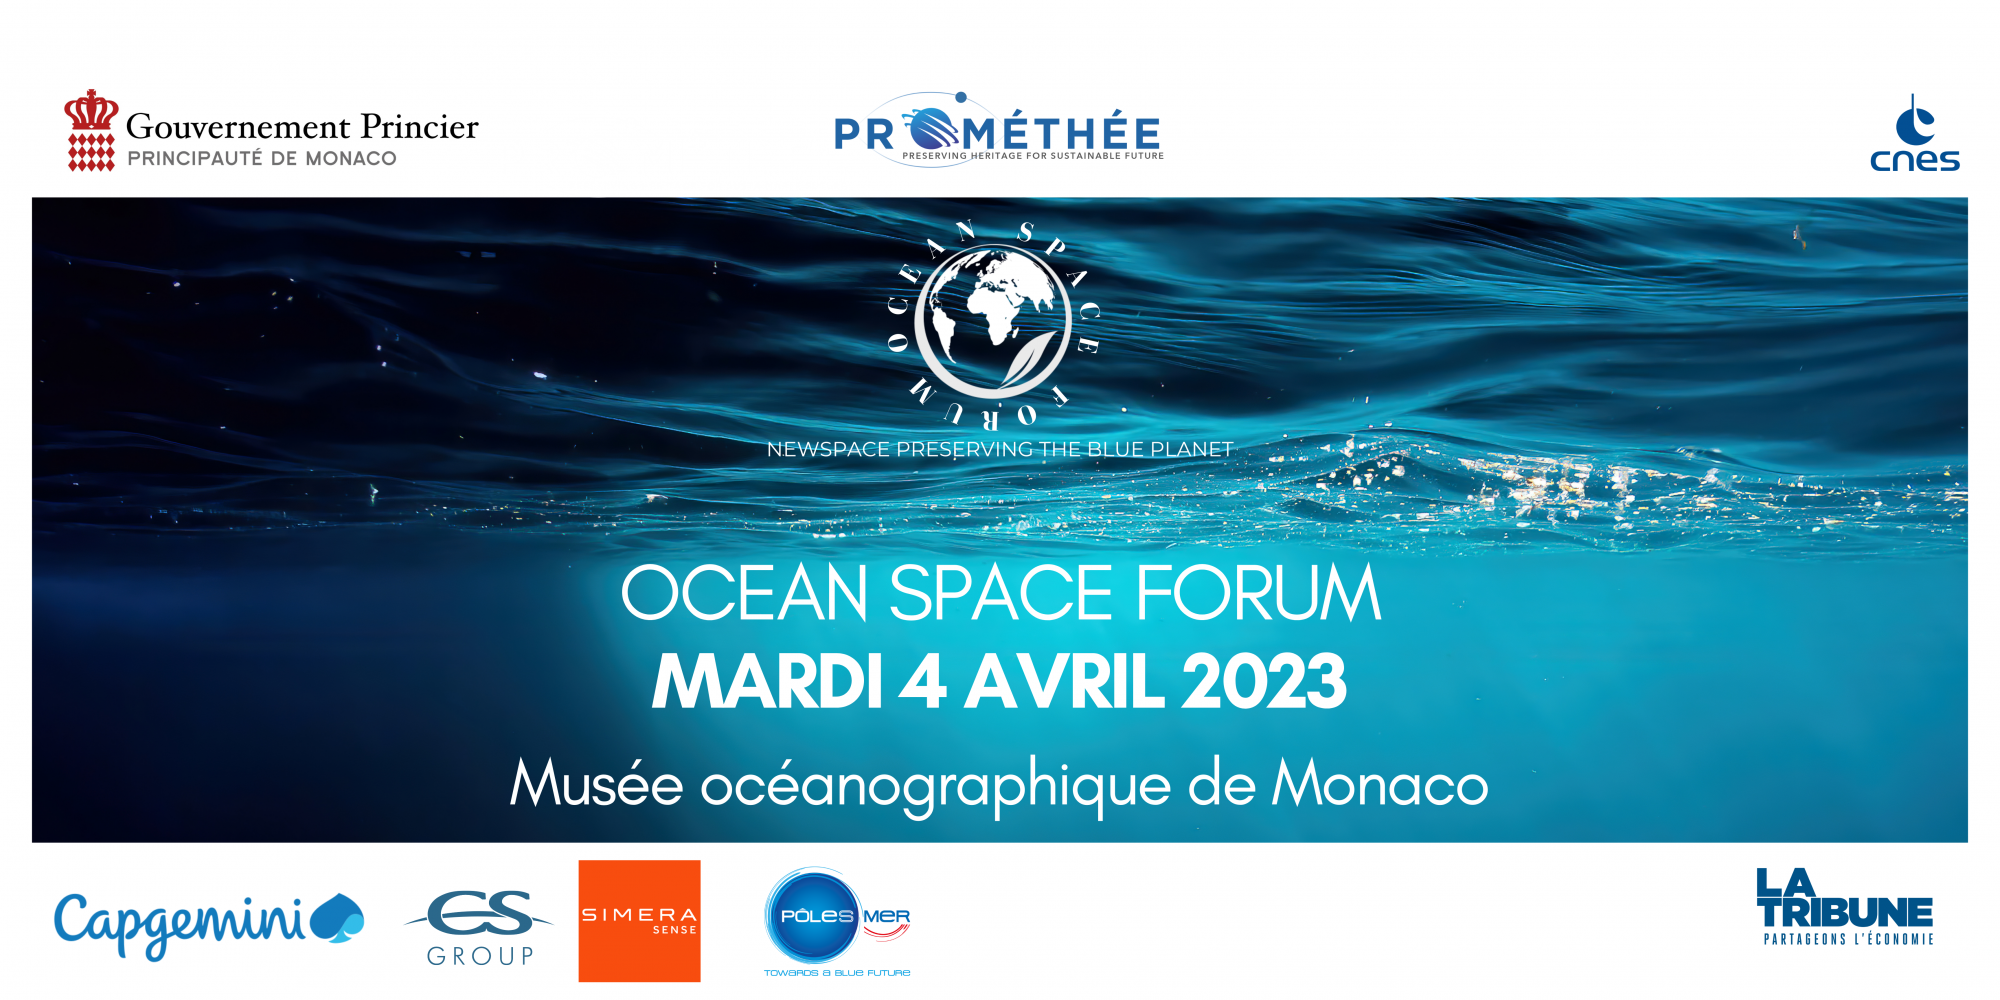 Ocean Space Forum 2023